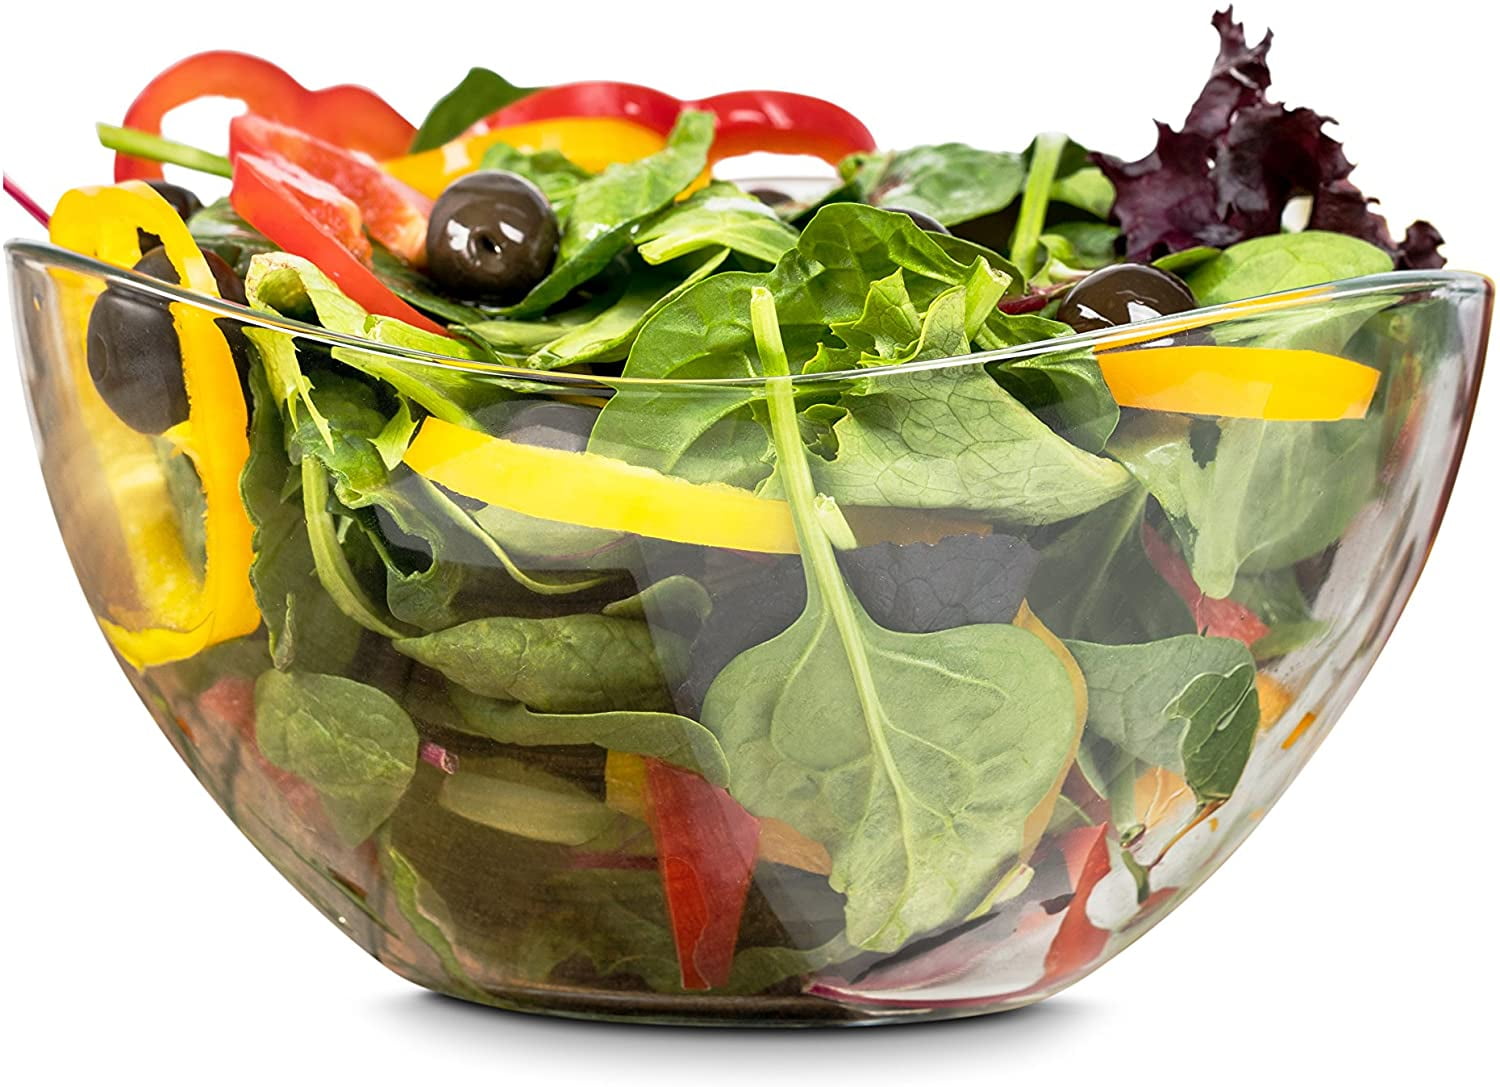 Zanzer Clear Glass Serving Salad Bowl - Mixing Bowl 63.5 oz, Wavy Design